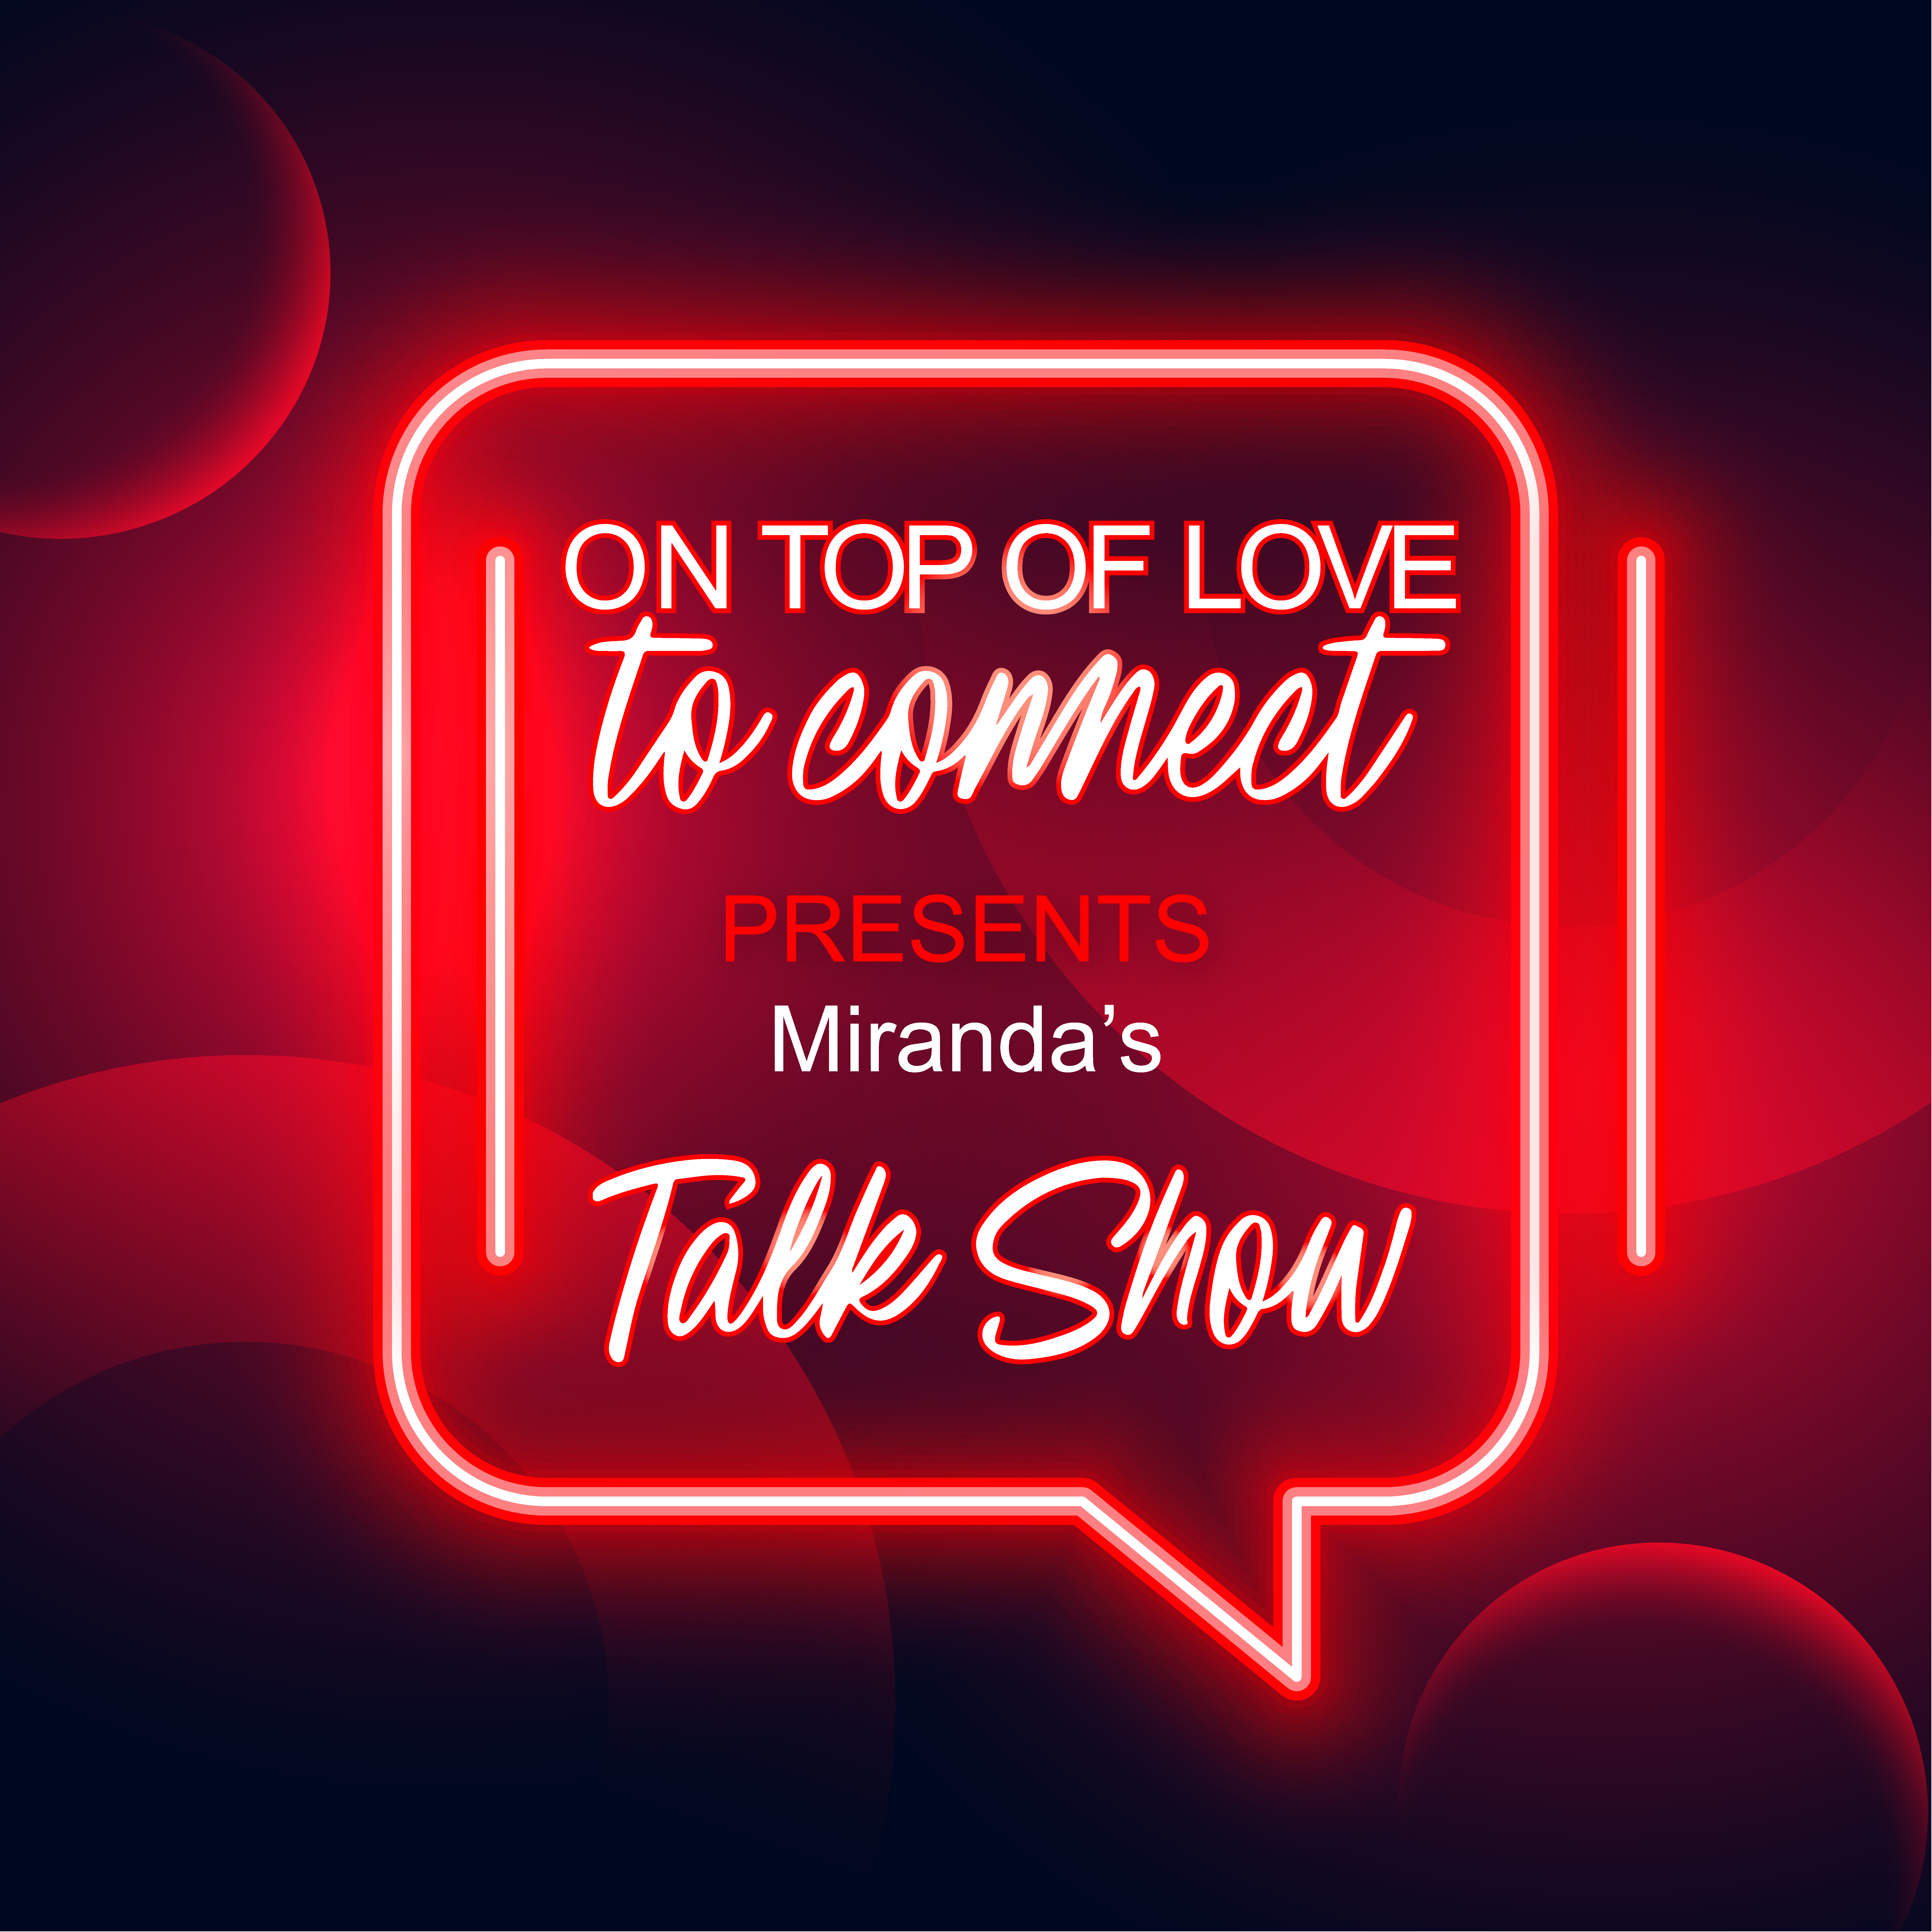 Miranda Talkshow to connect